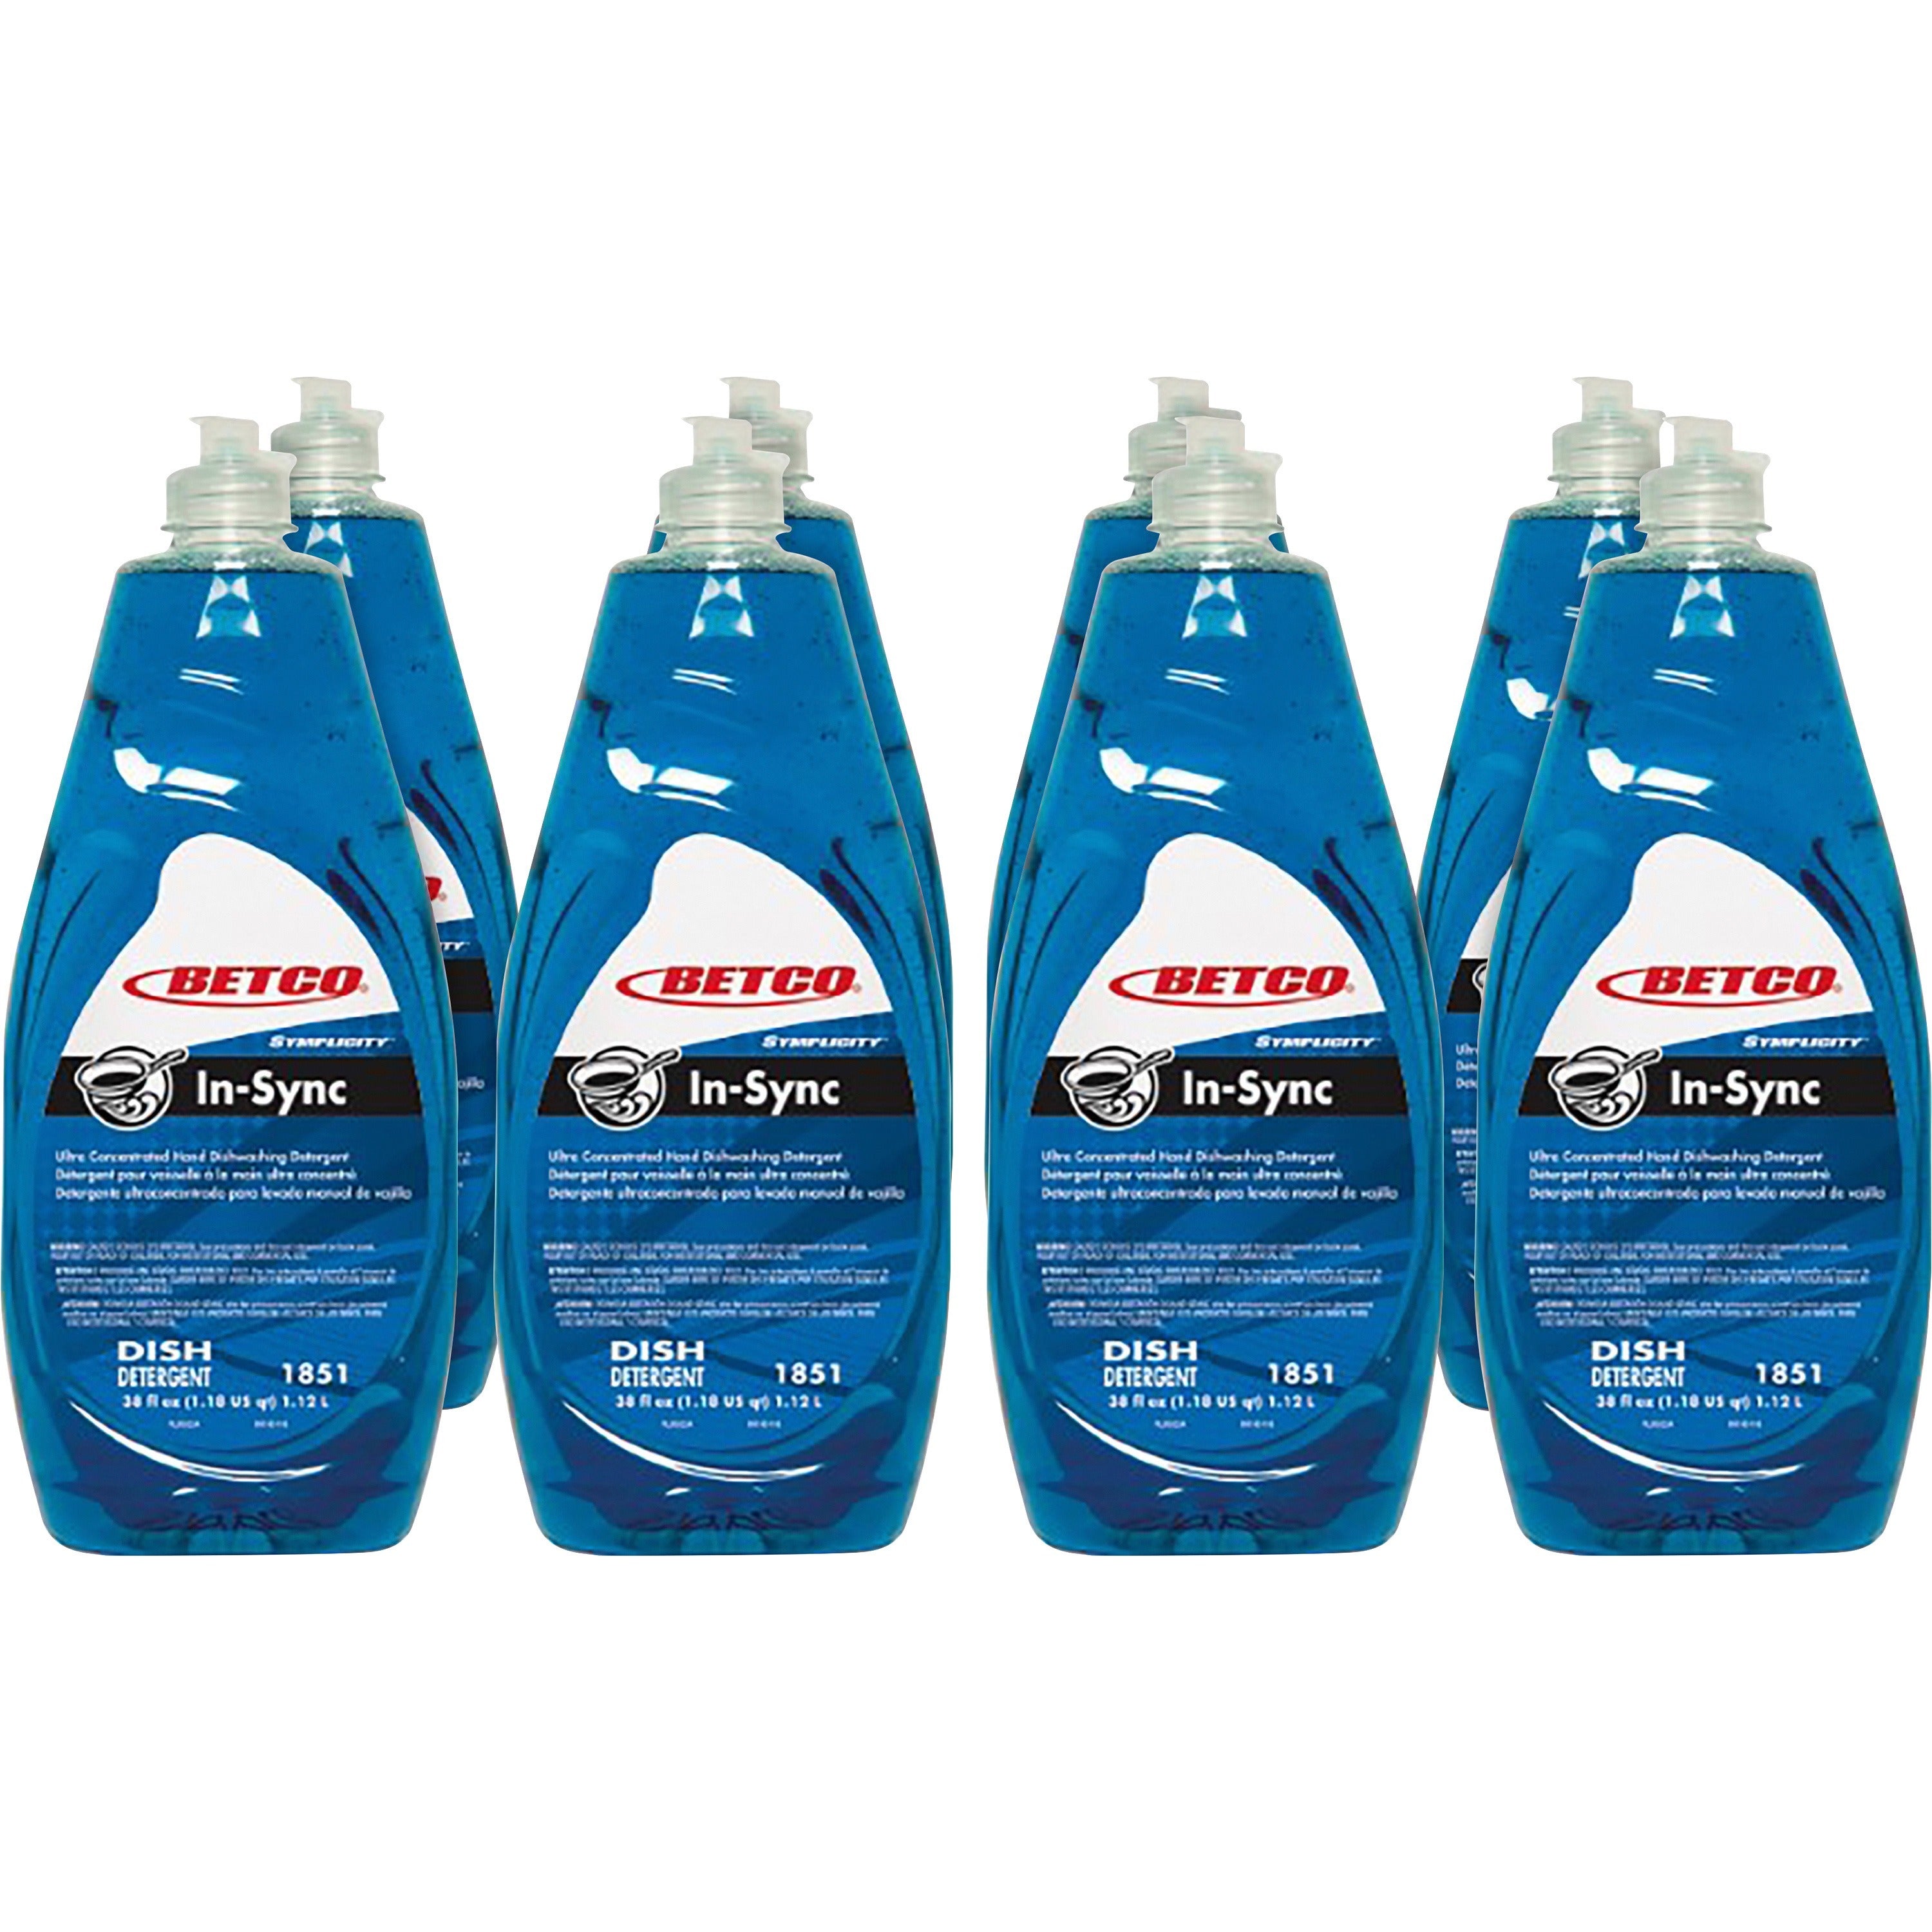 Betco Simplicity In-Sync Dishwashing Liquid - Concentrate - 38 fl oz (1.2 quart) - Fresh Ozonic ScentBottle - 8 / Carton - Film-free, Rinse-free, Streak-free, Phosphate-free - Blue - 1